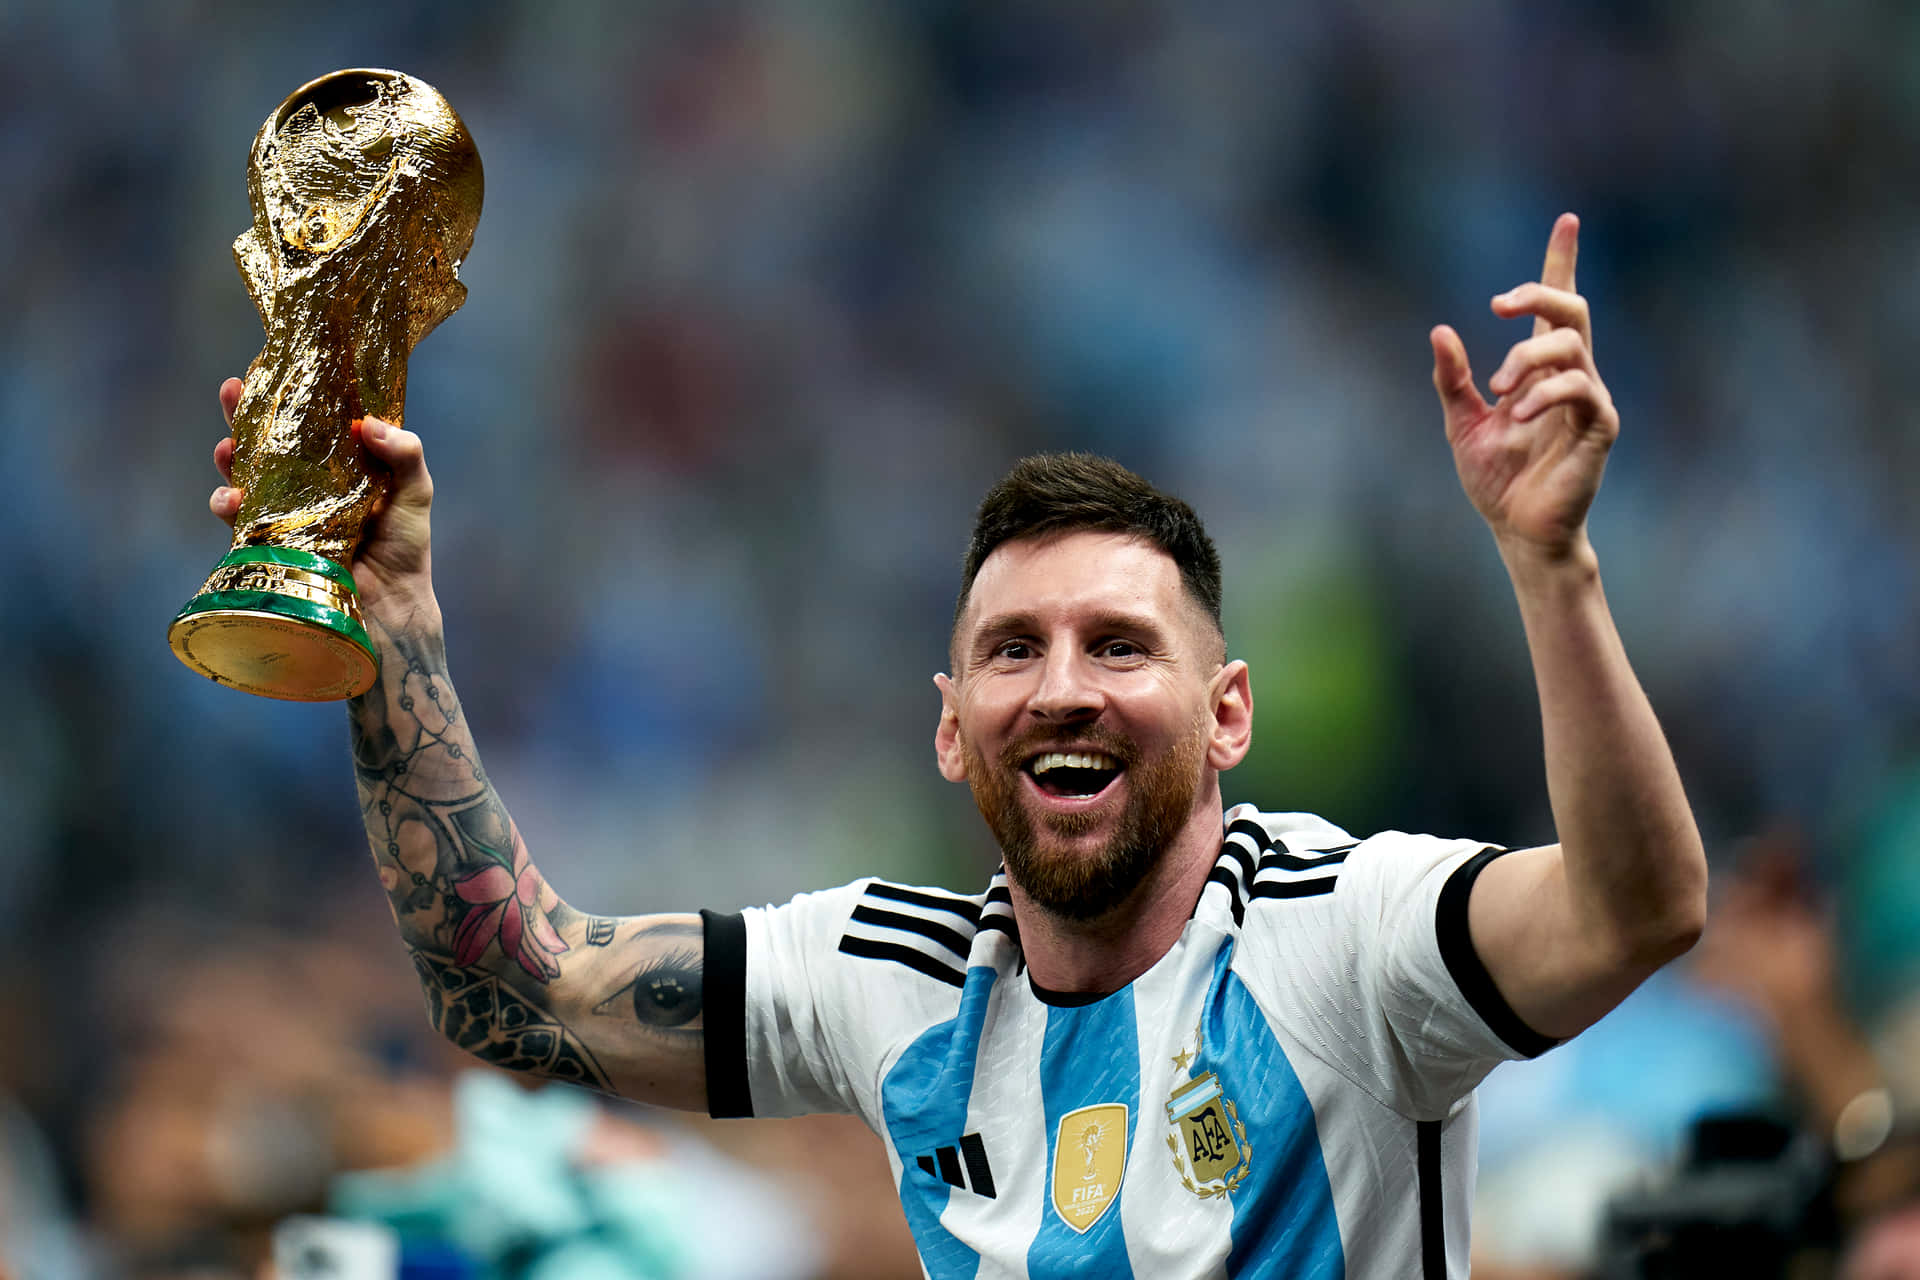 Triumphant Messi Celebration On The Football Field Wallpaper